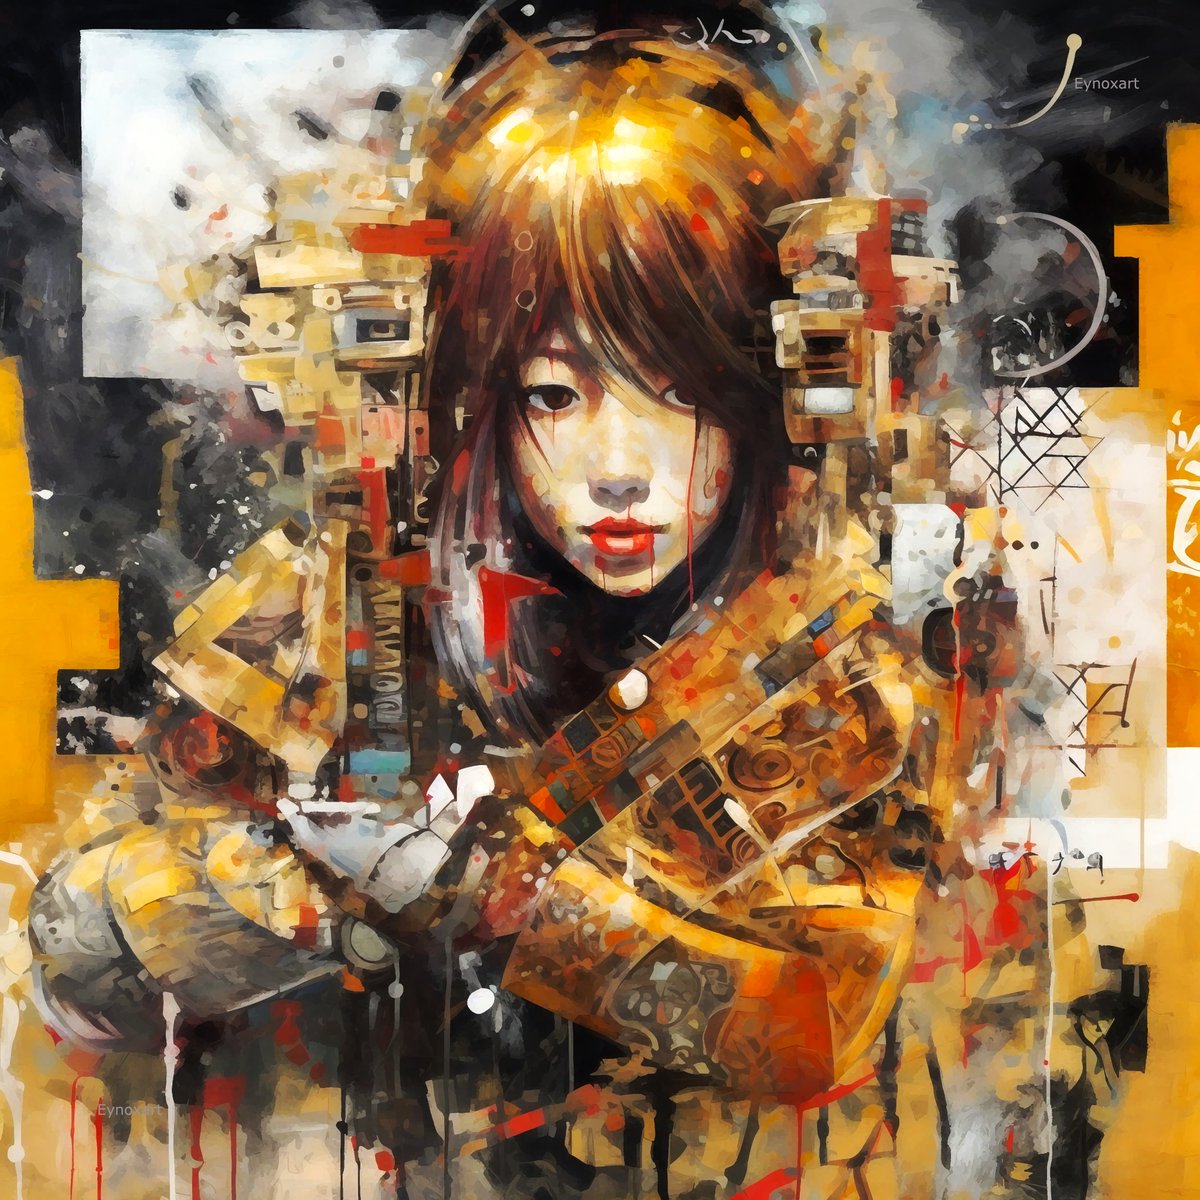 'Waterpixel Art' no.1⃣0⃣5⃣❤️
. 
#waterpixel #mixedmedia #deviantart #Aiart #art #digitalart #aiartcommunity #AIArtwork #samurai #samuraiart #japan #asia #abstract #female #portrait #modernart #yellow